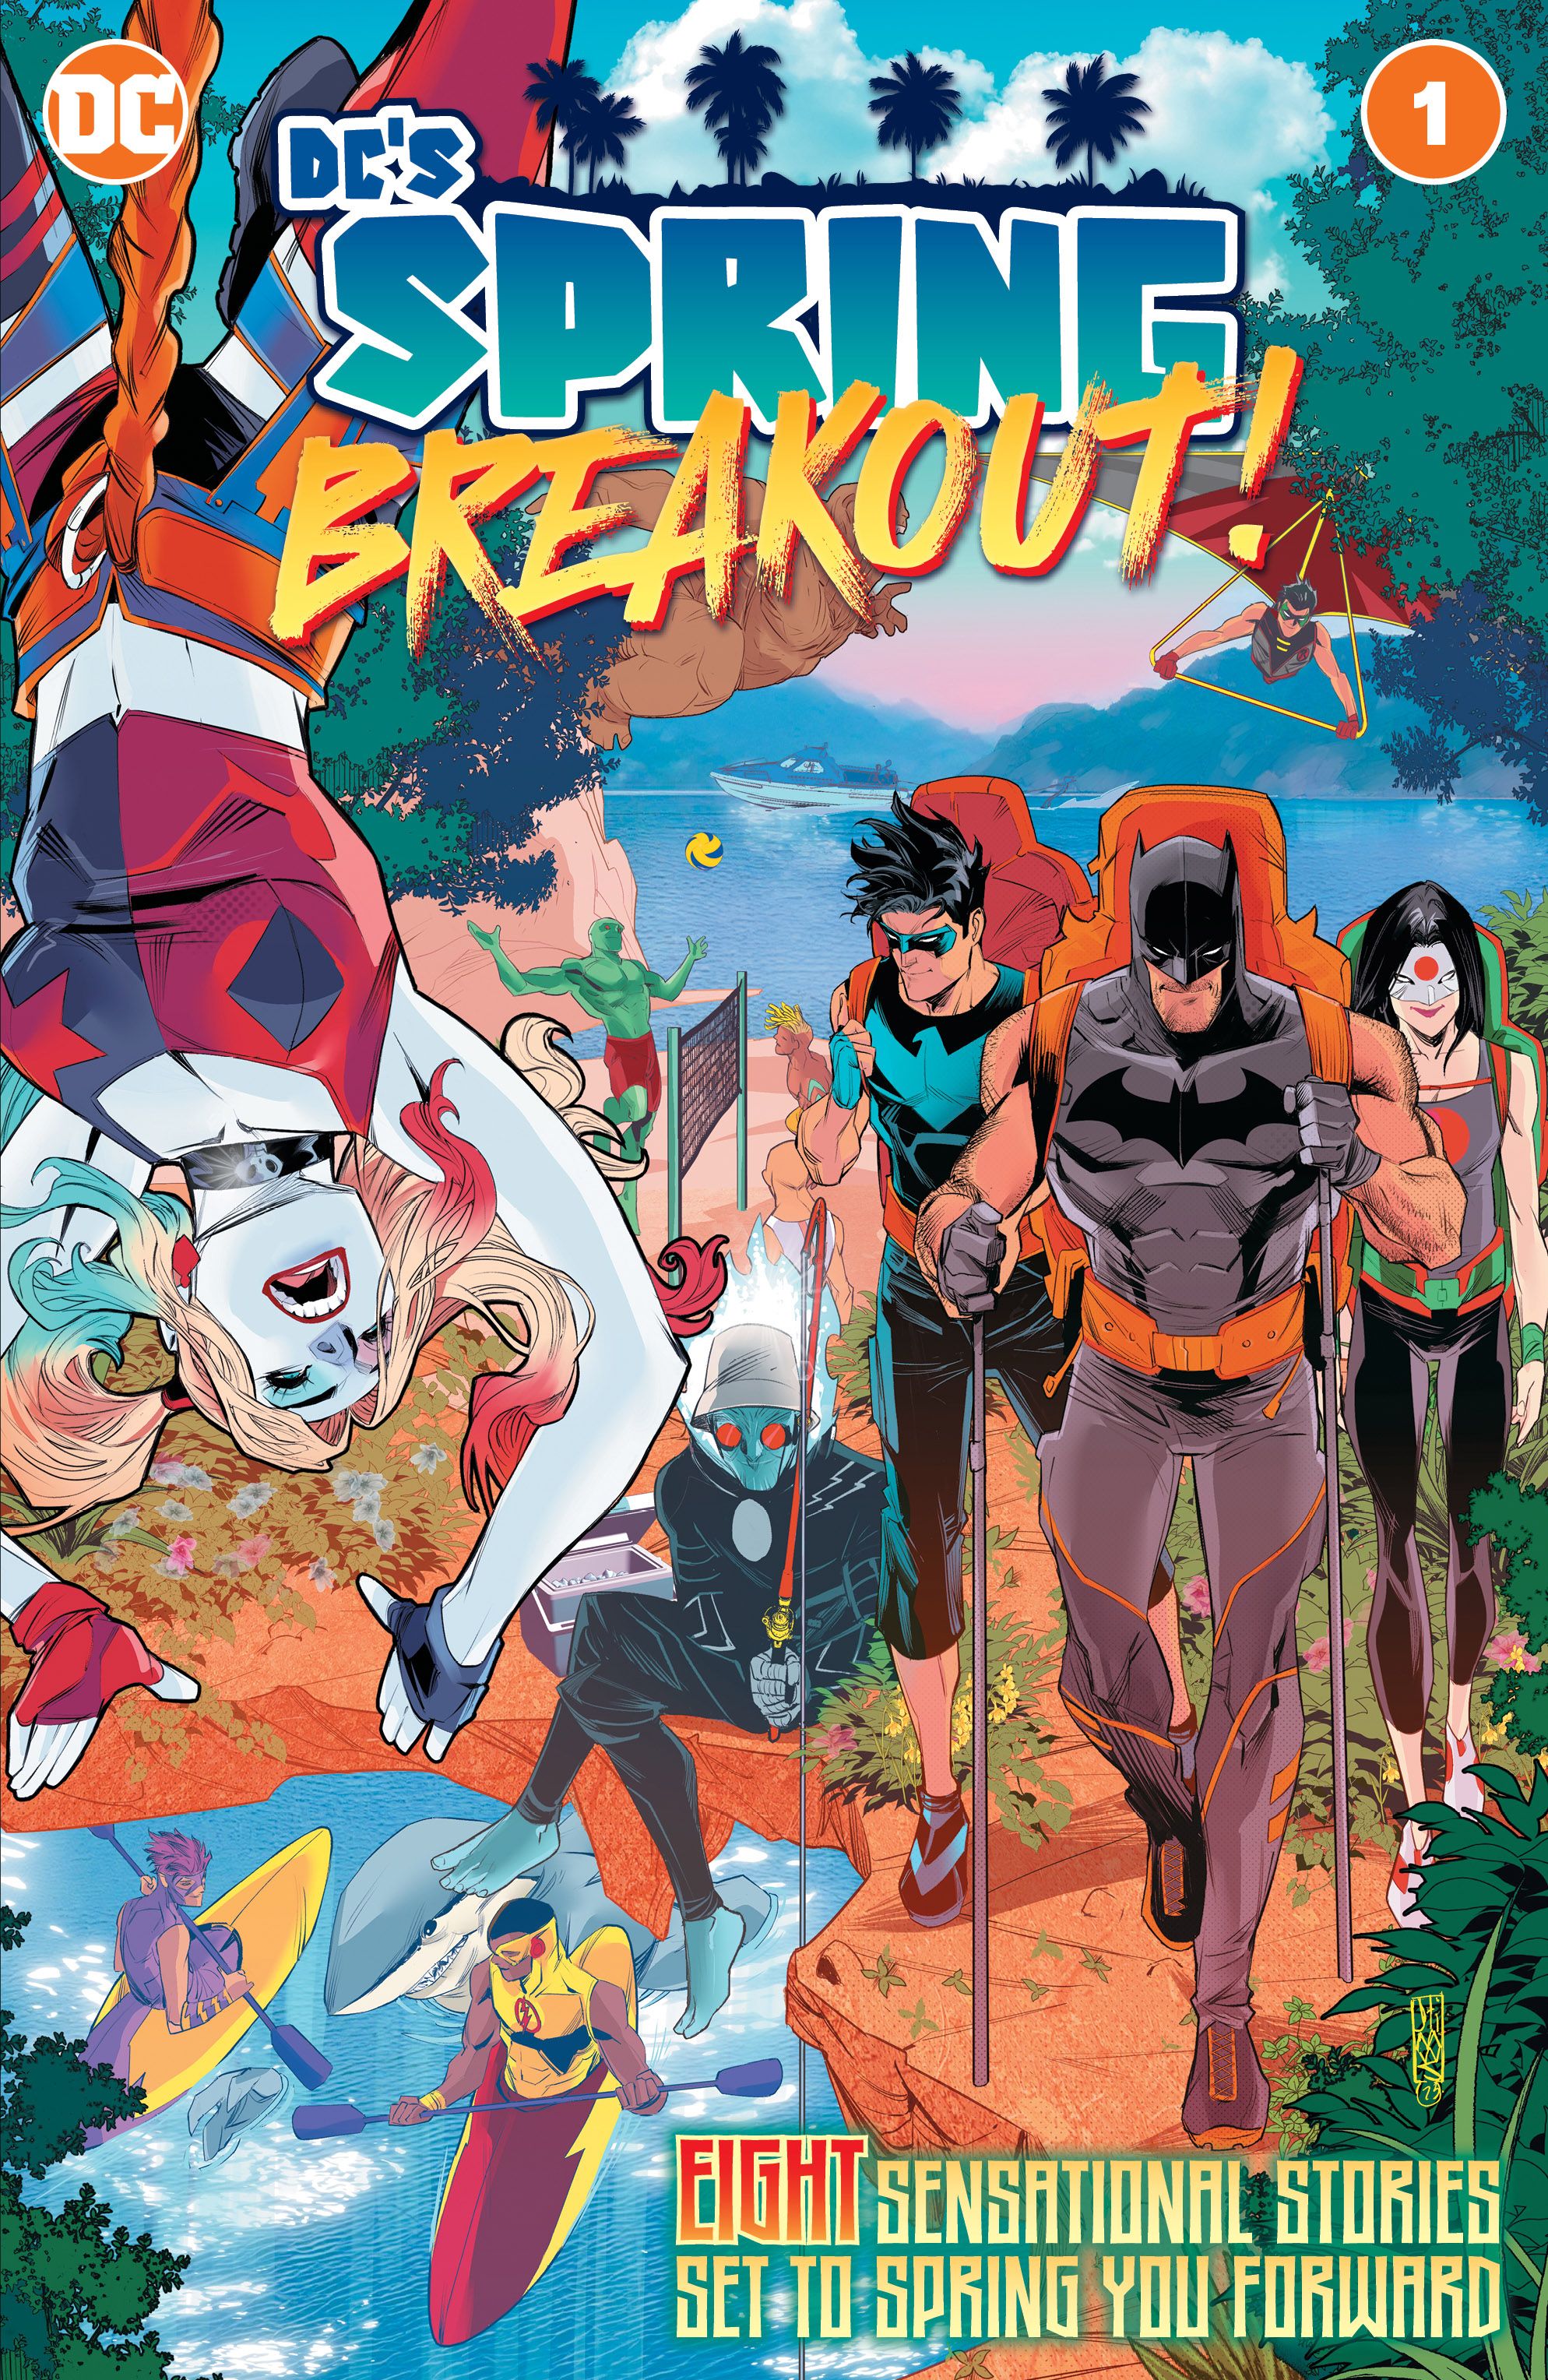 DC's Spring Breakout! Comic